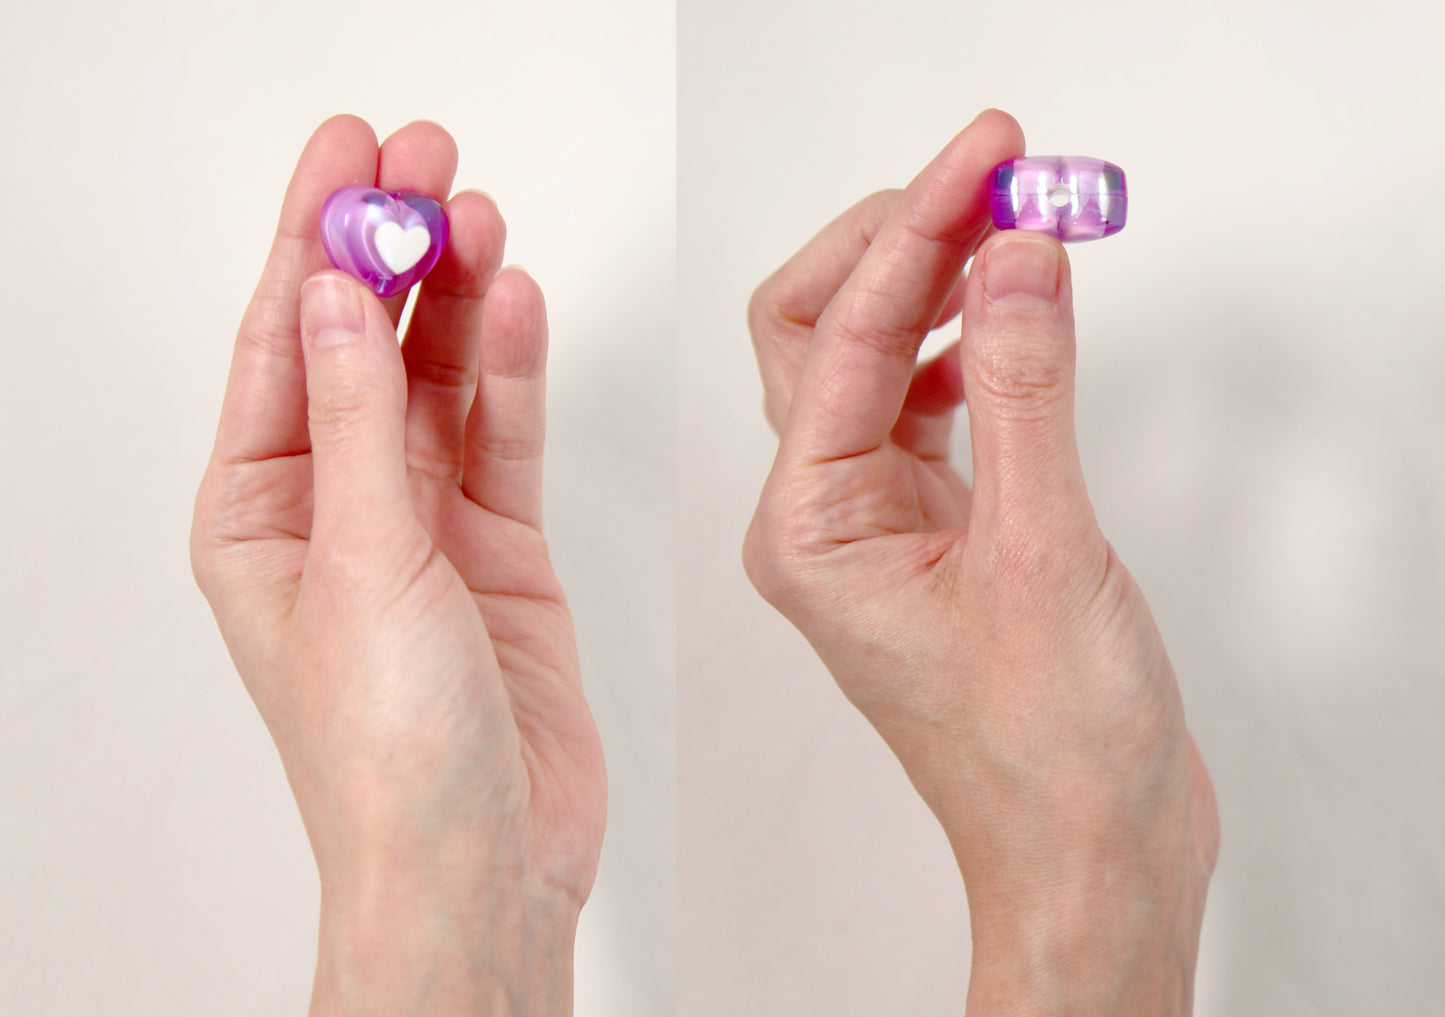 Heart Beads - 22mm Amazing AB Translucent Double Heart Acrylic or Resin Beads - 12 pcs set